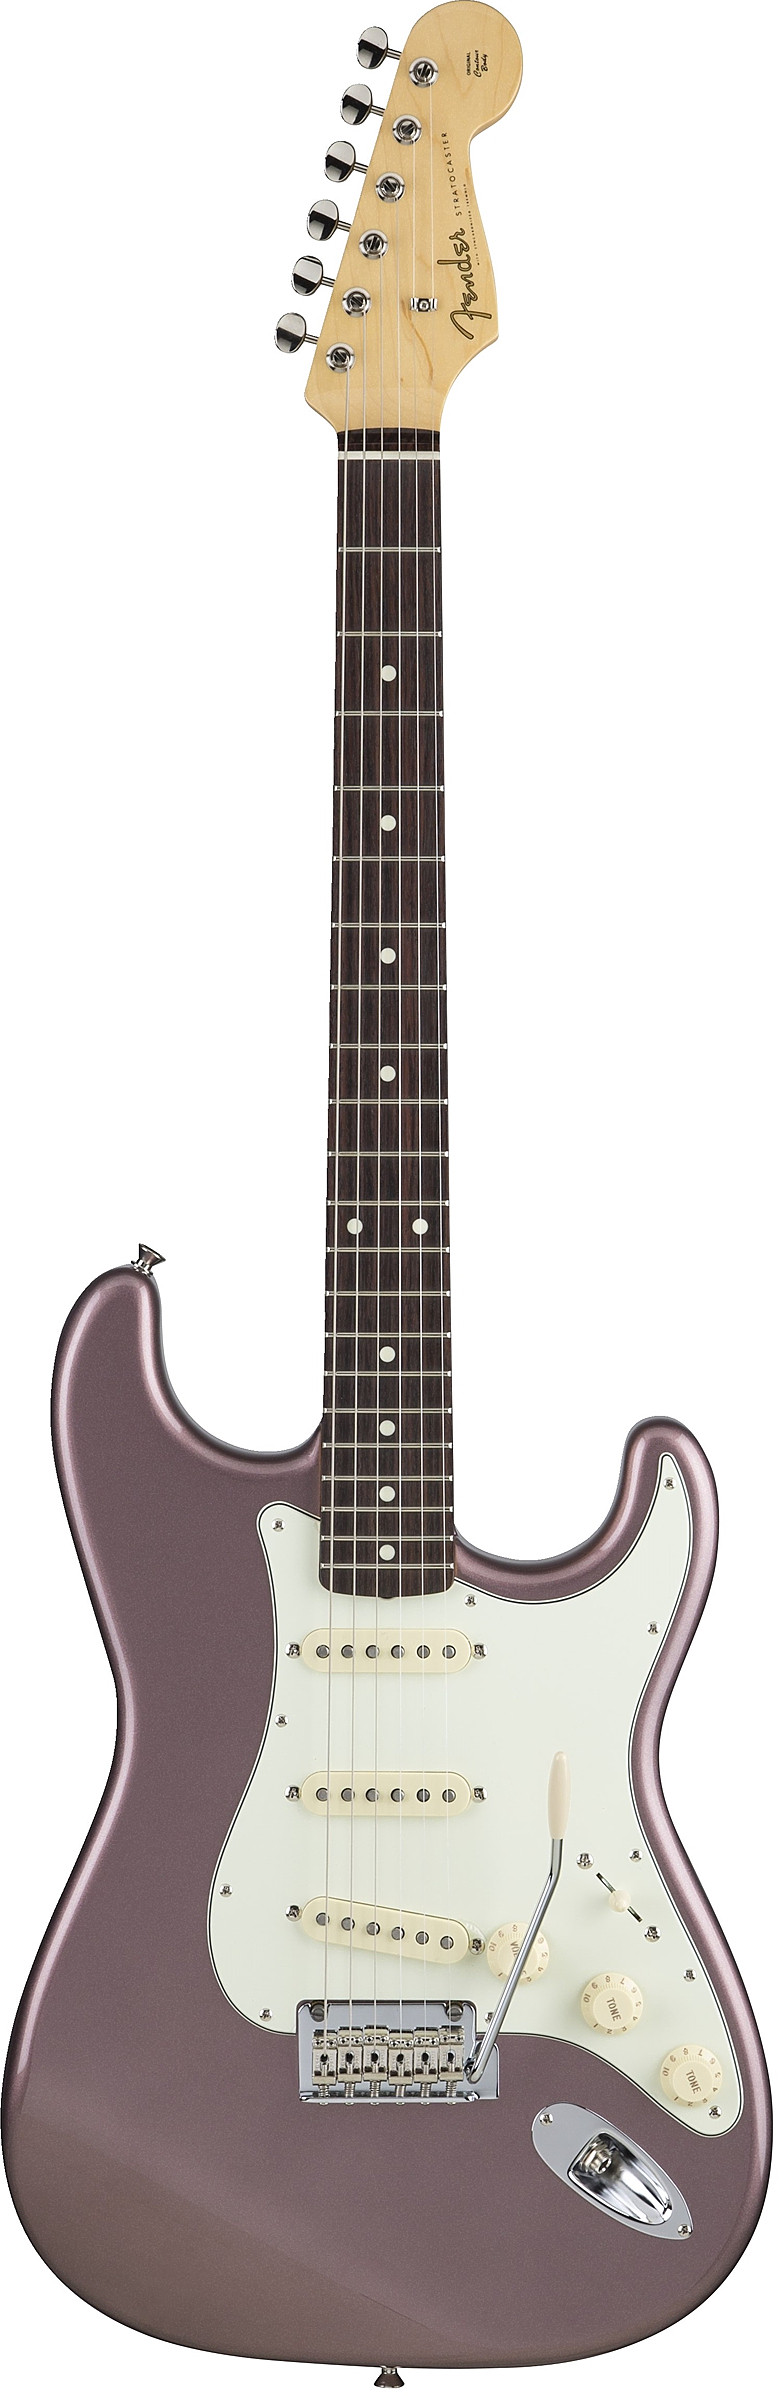 Fender Made in Japan Hybrid `60s Stratocaster Review | Chorder.com